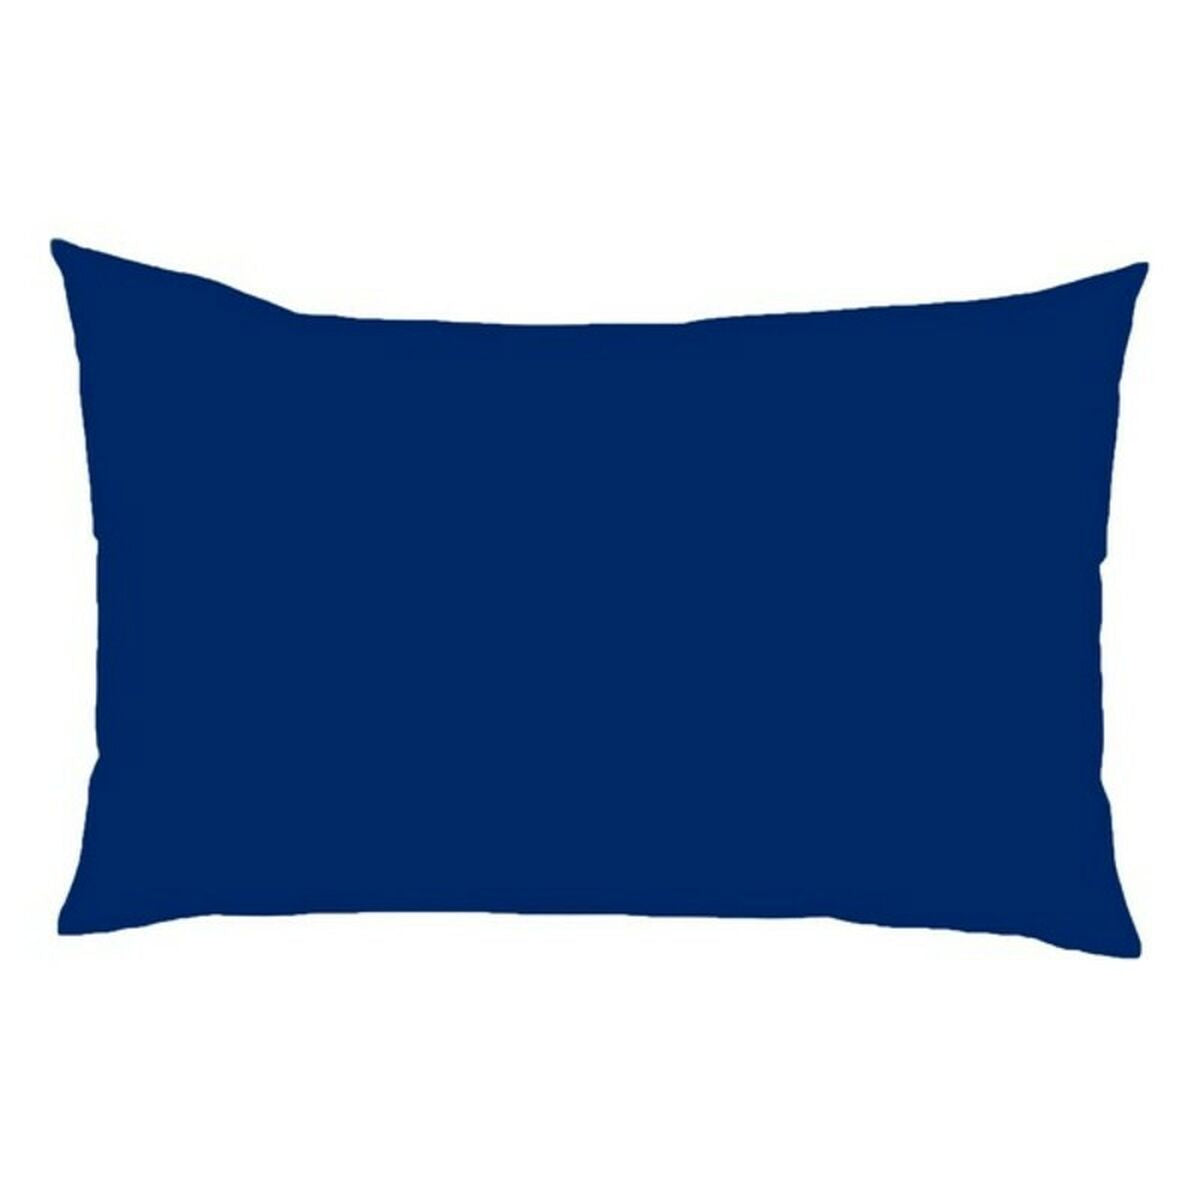 Pillowcase Naturals (45 x 90 cm)